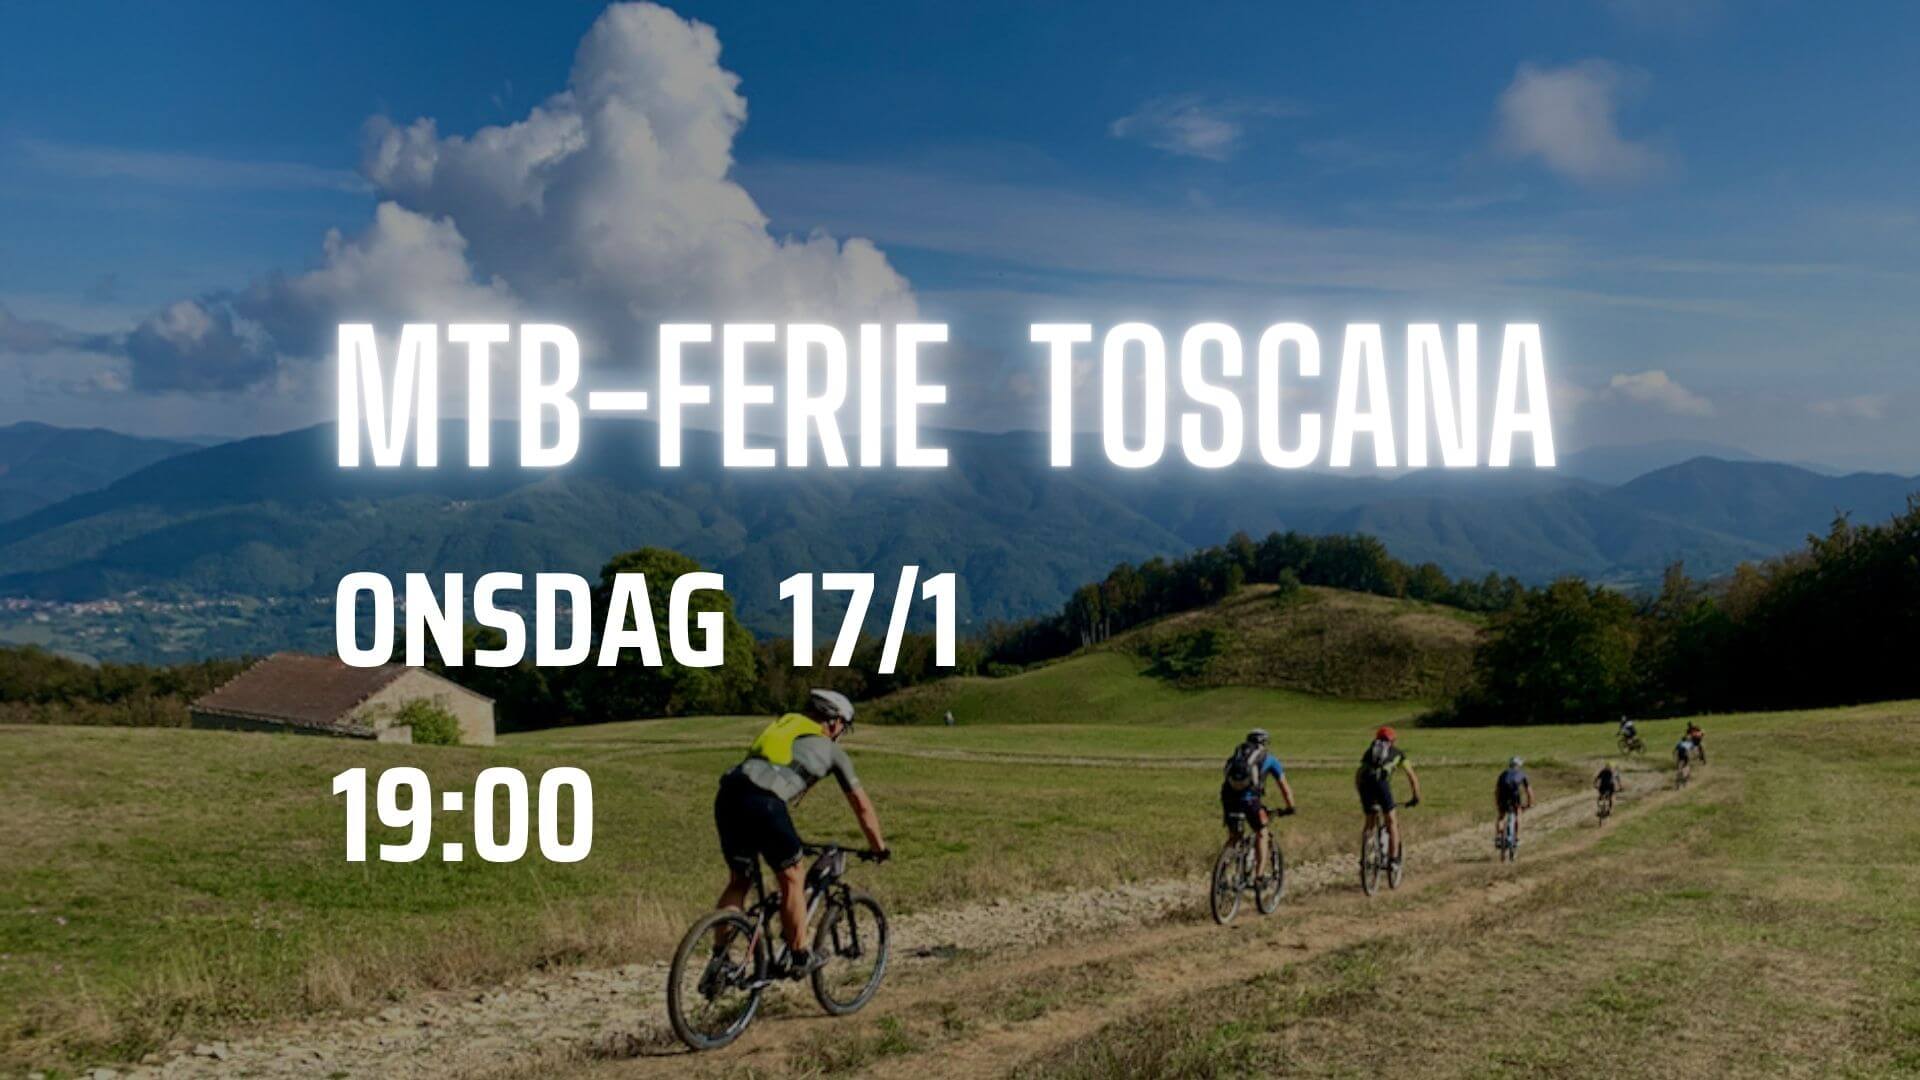 Online INFO-aften om MTB-ferie. Toscana